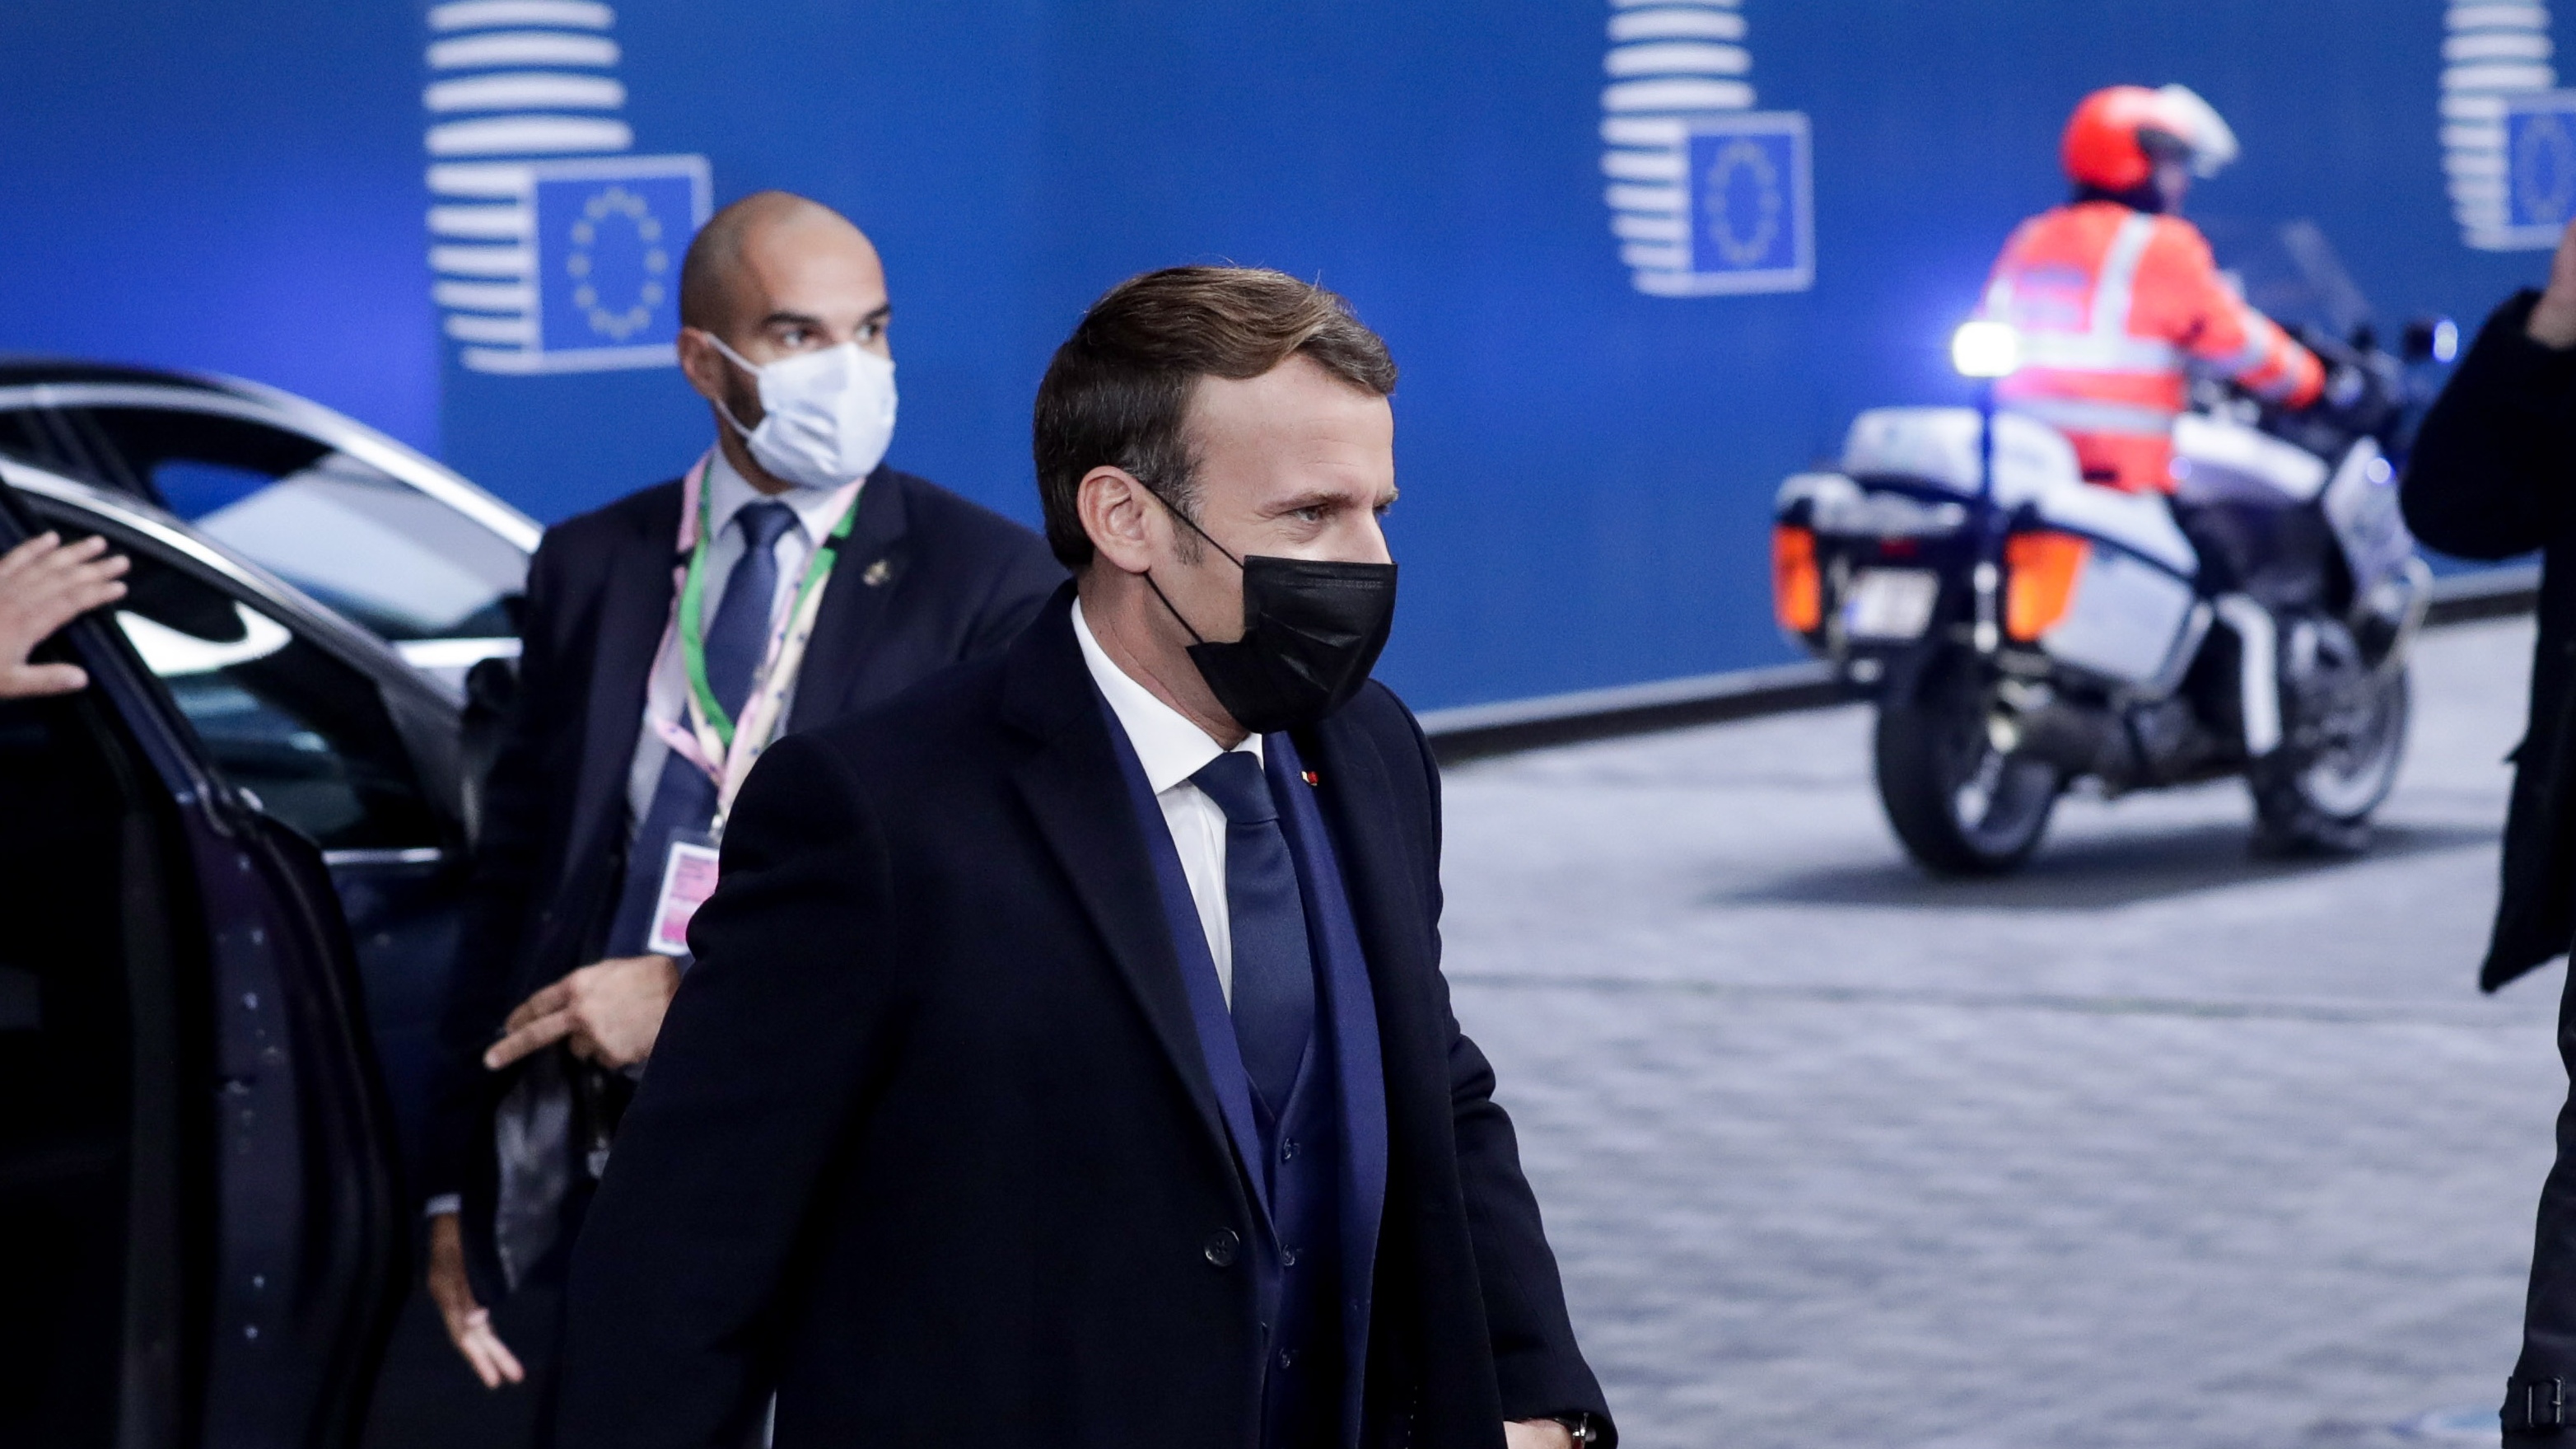 Emmanuel Macron arrives at the European Parliament building wearing a black face mask.